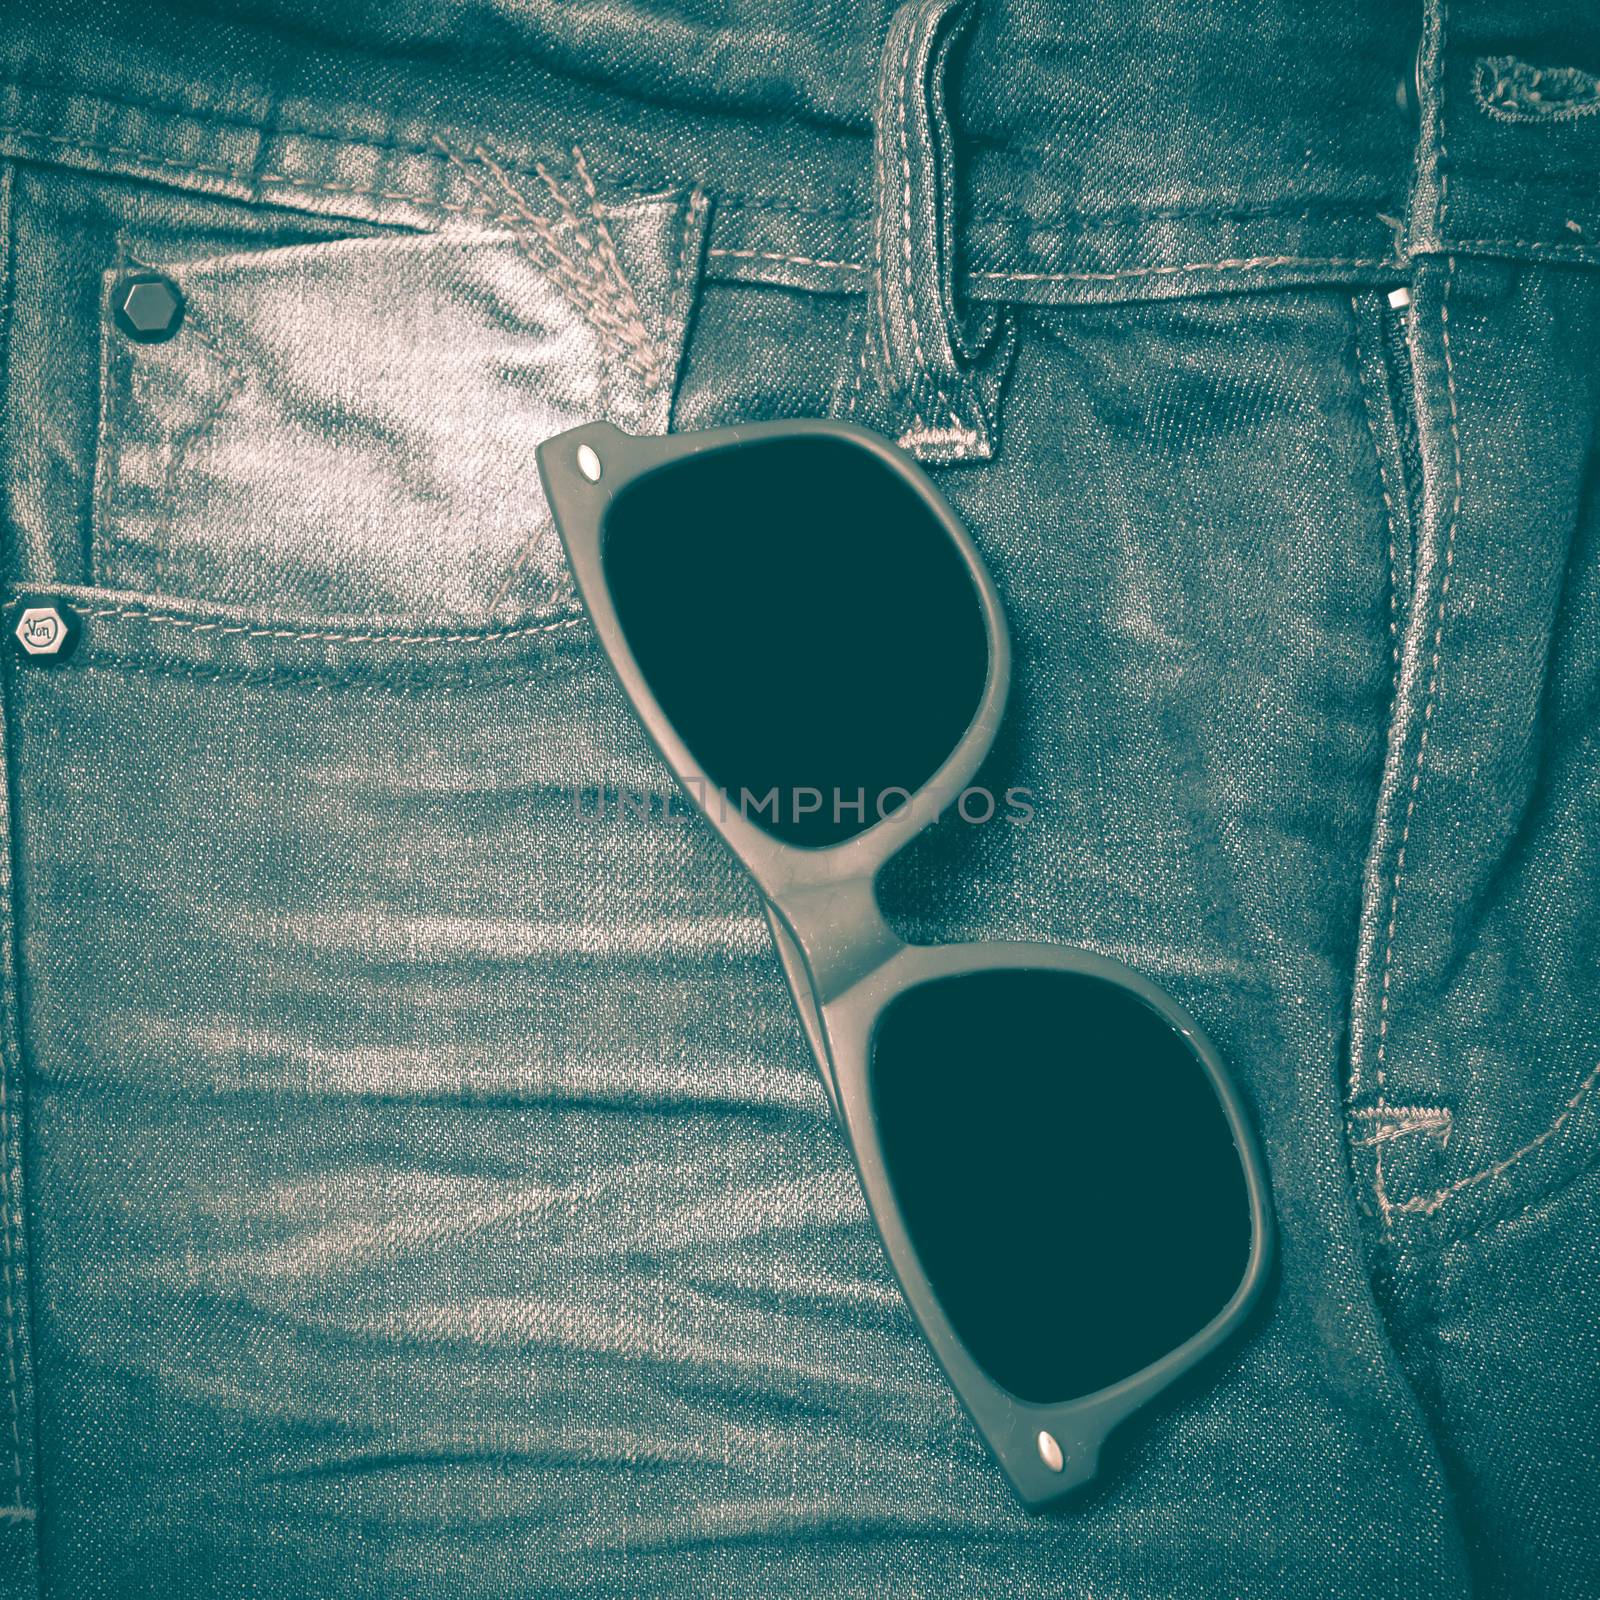 sunglasses on jean pants retro vintage style by ammza12